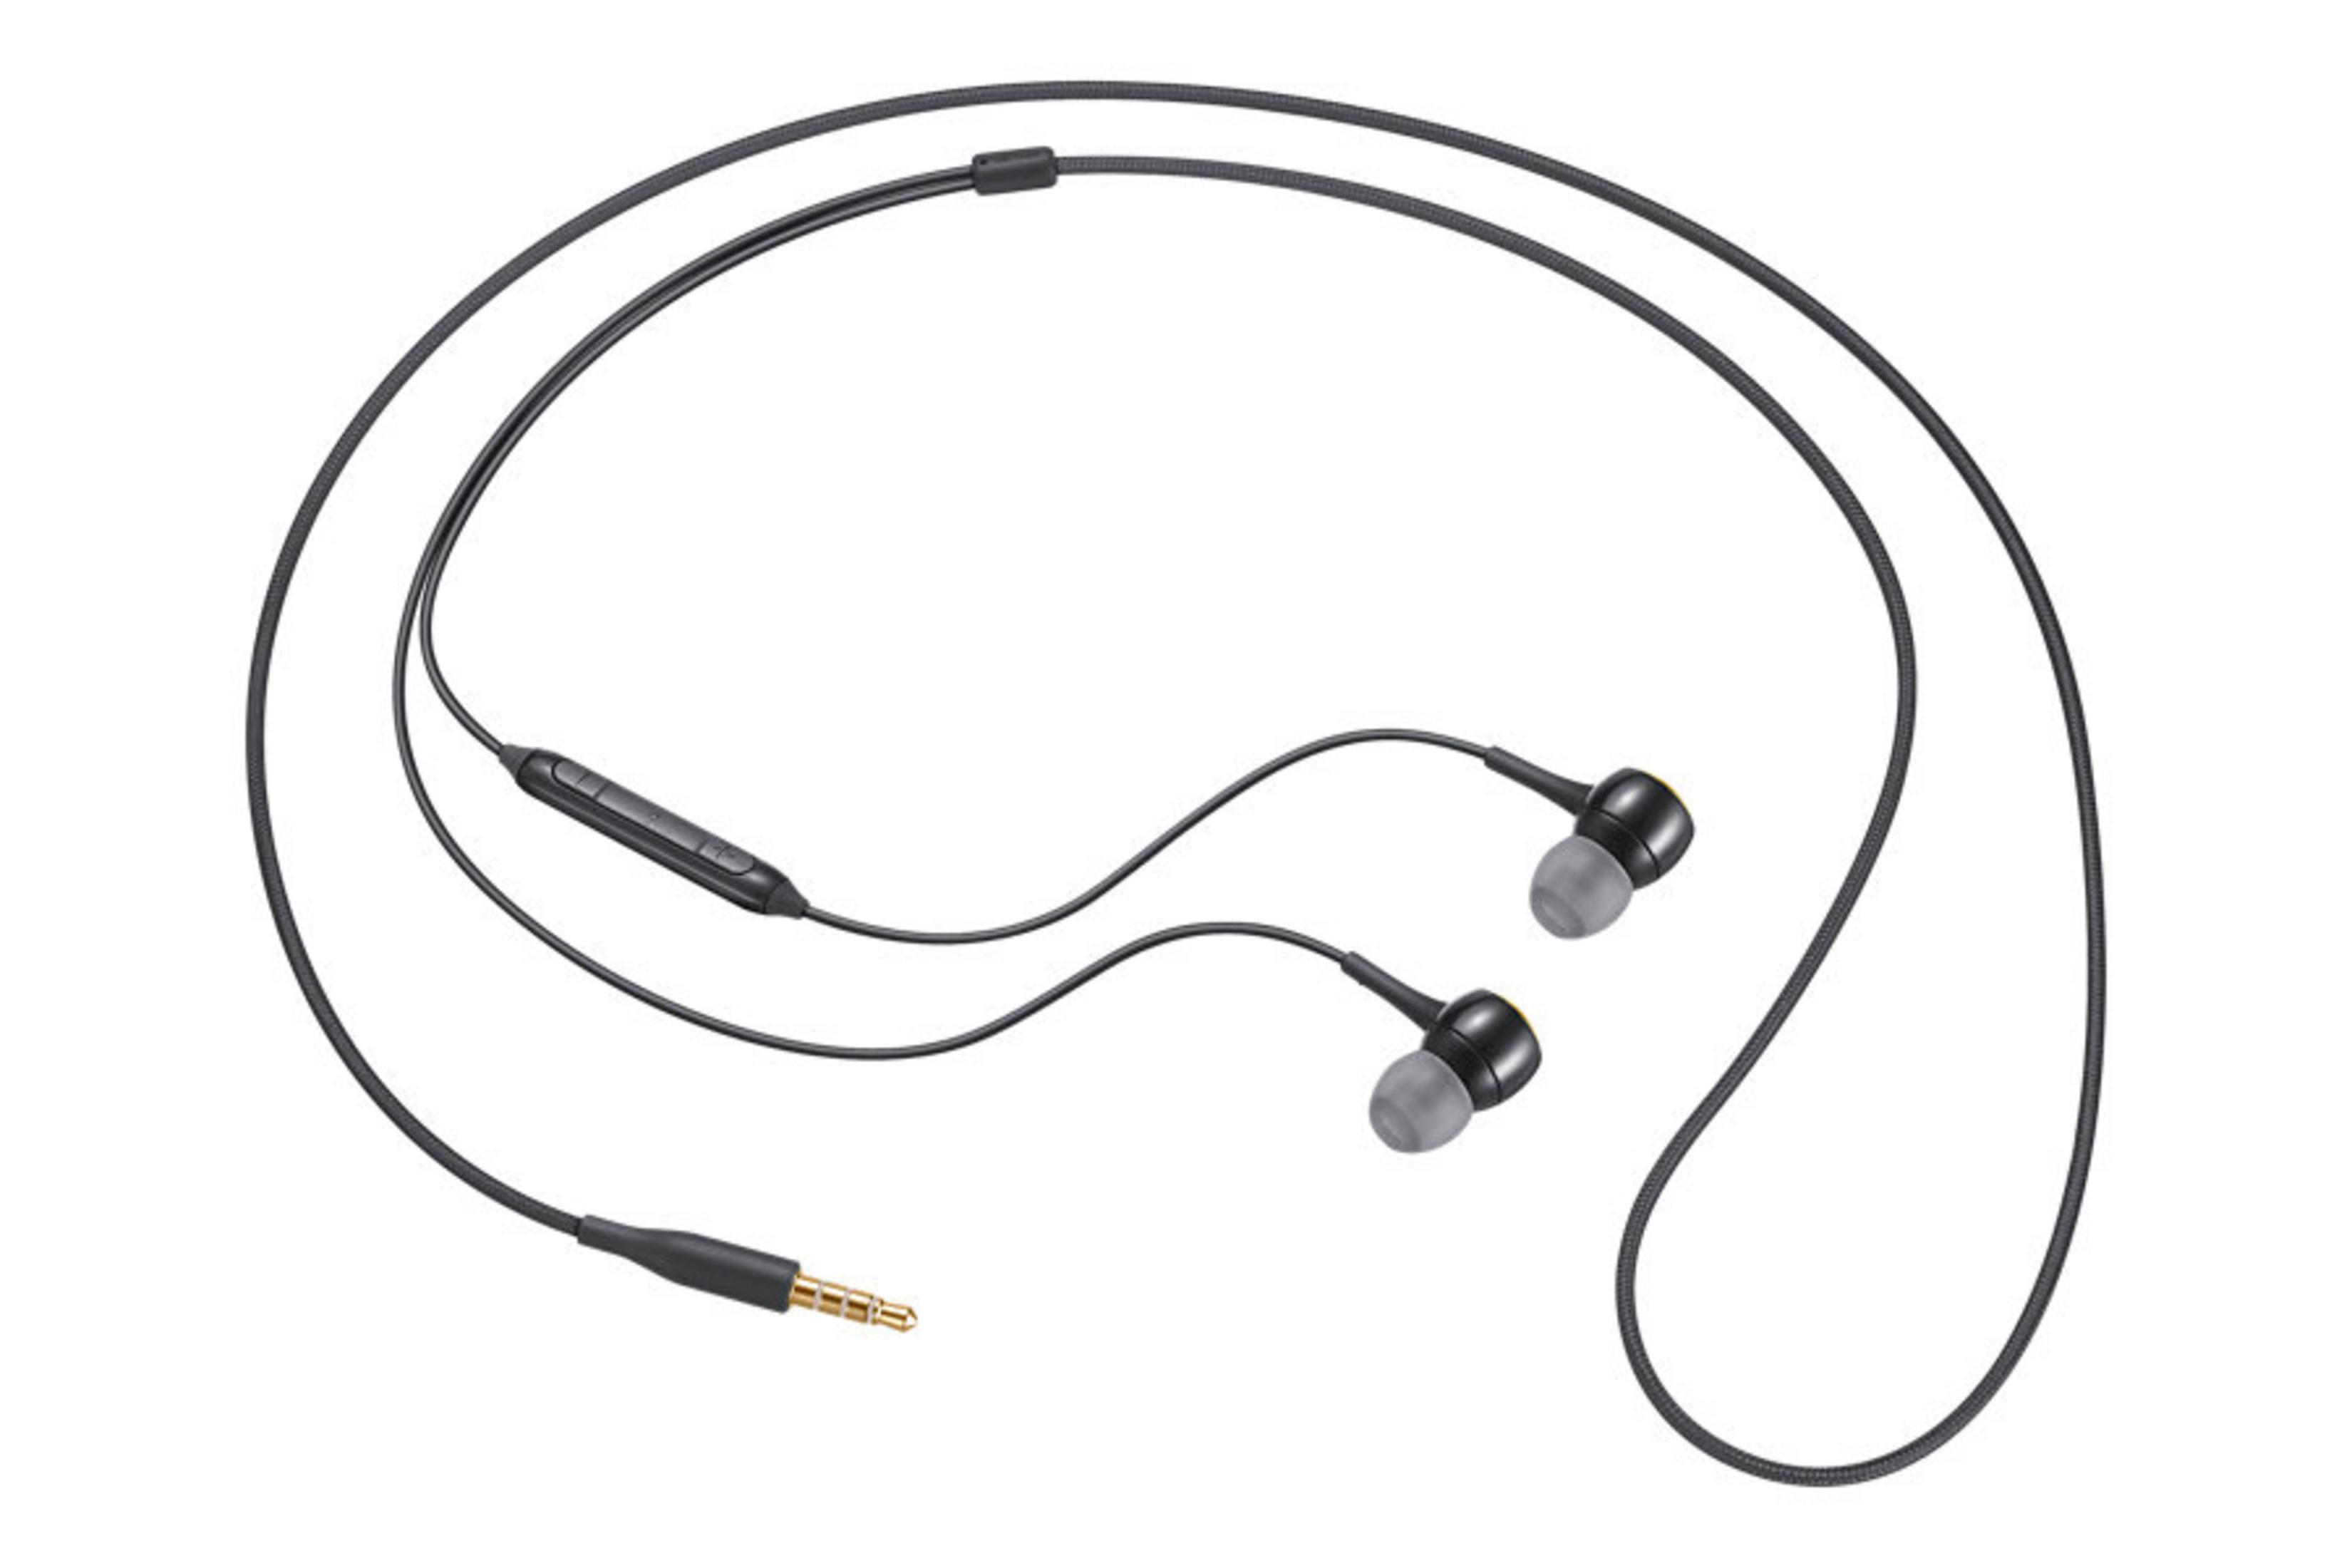 Schwarz In-ear EO-IG935BBEGWW, Headset SAMSUNG